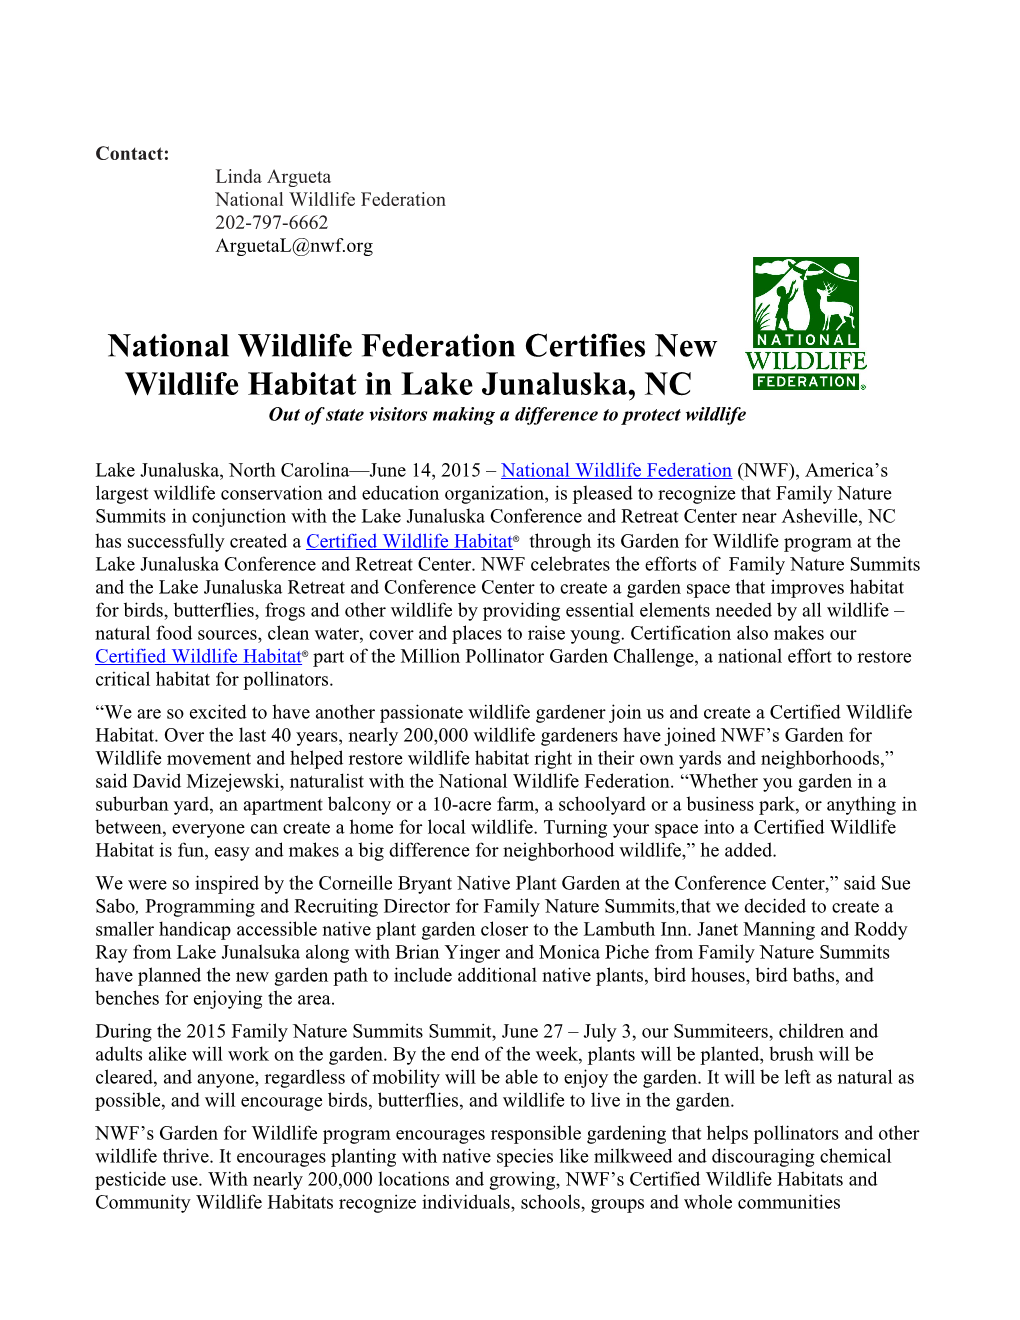 National Wildlife Federation Certifies New Wildlife Habitat in Lake Junaluska, NC